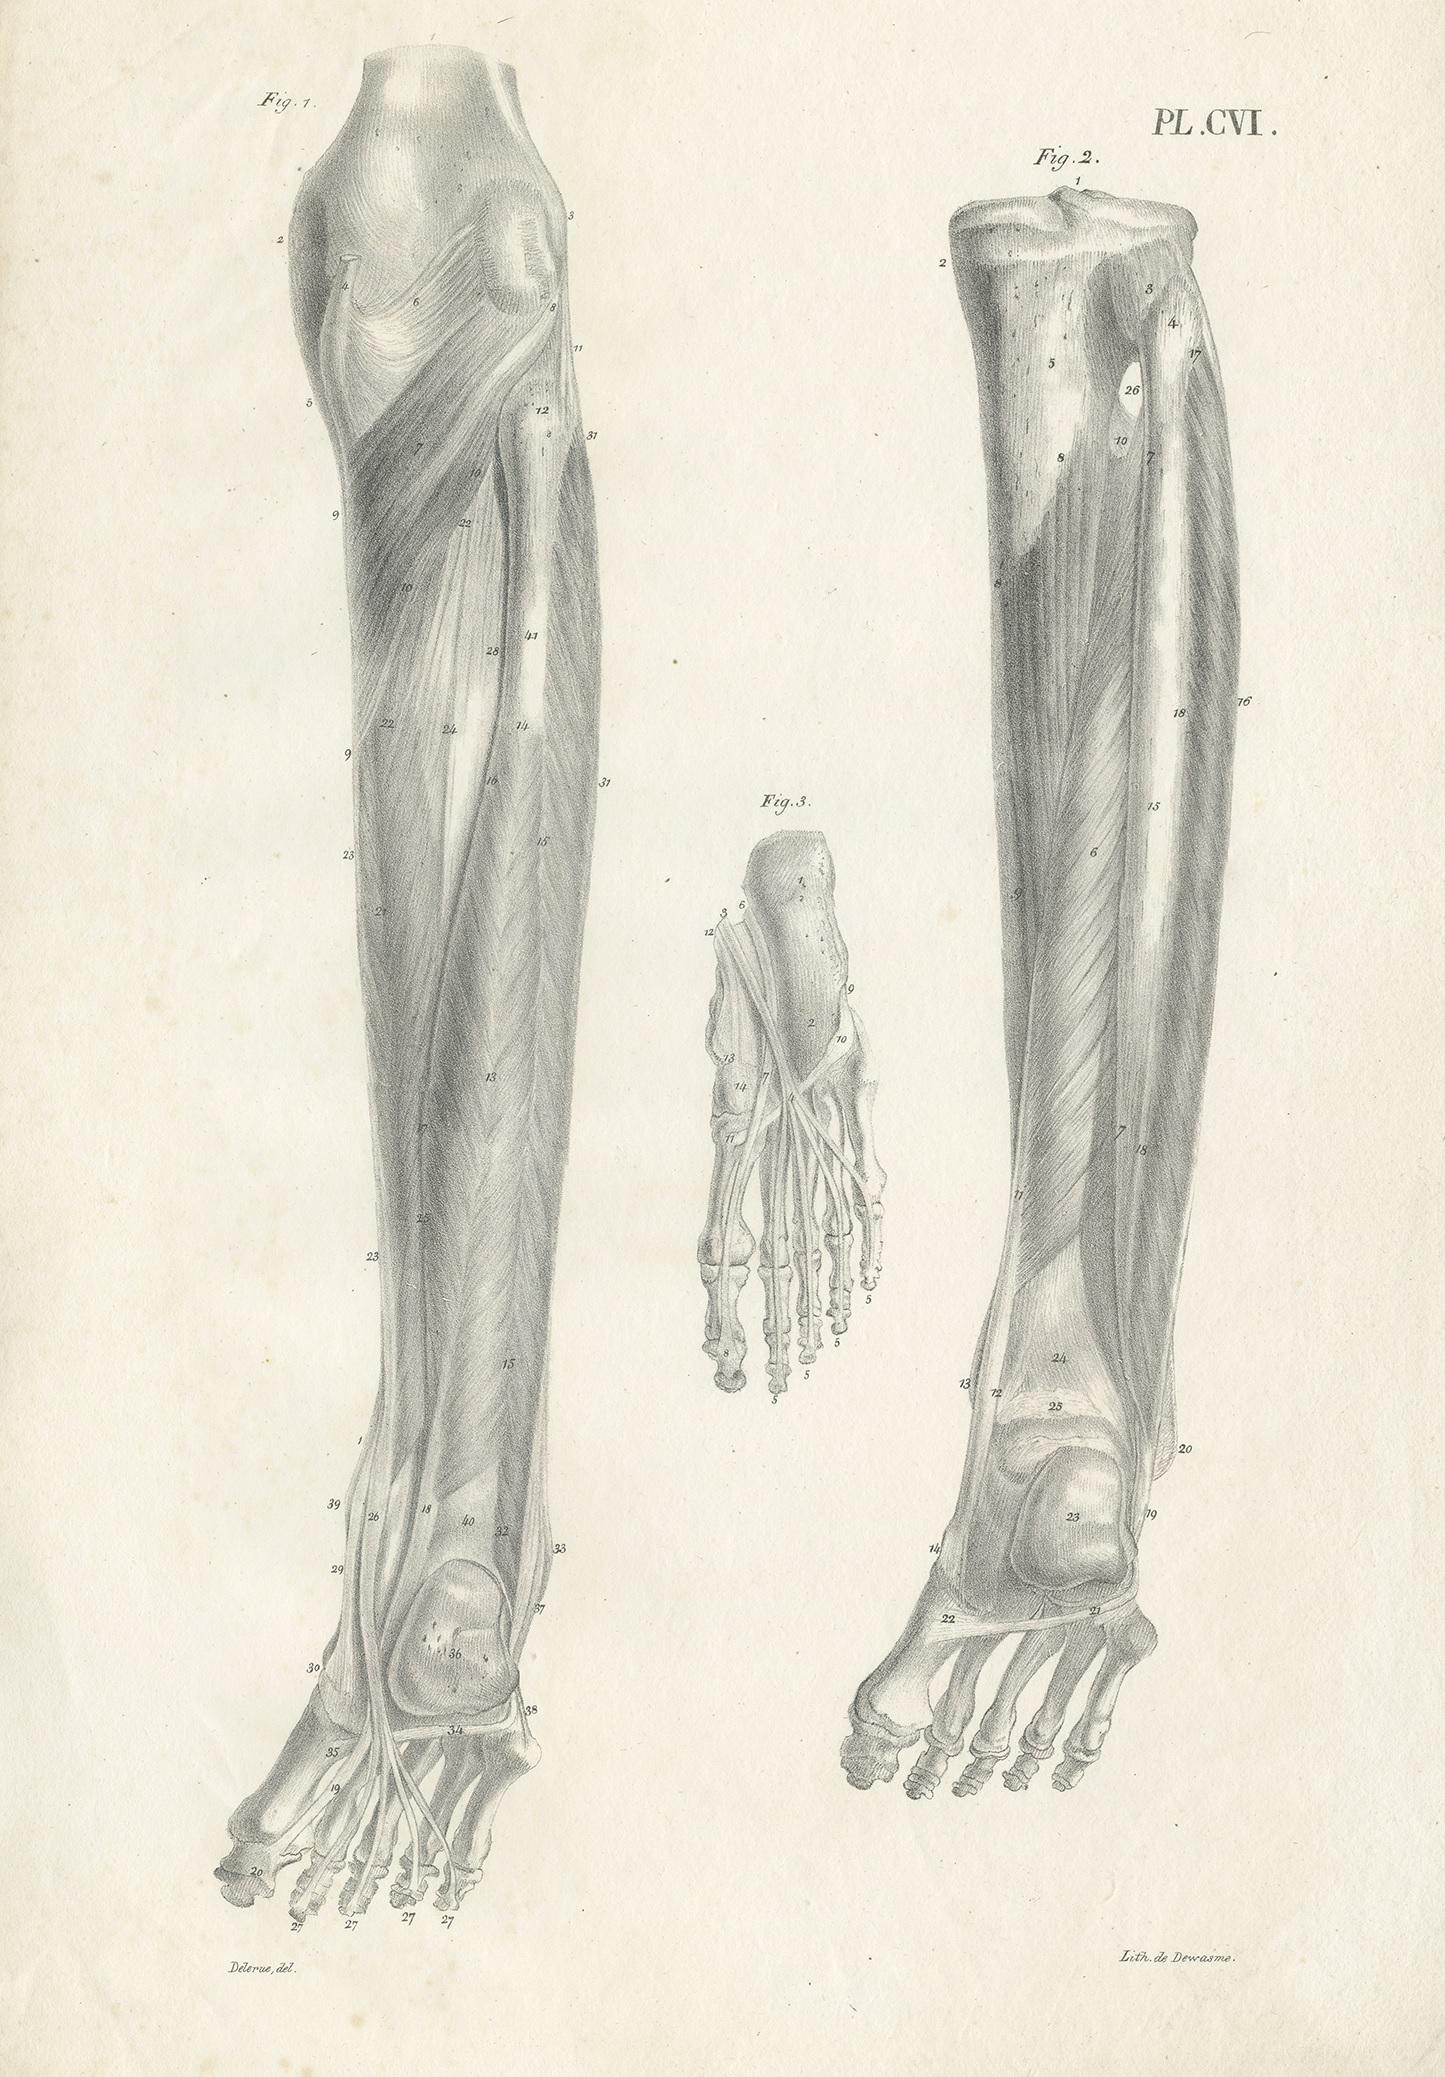 Antique anatomy print showing foot muscles. This print originates from 'Anatomie De L'Homme Ou Descriptions Et Figures Lithographiees De Toutes Les Parties Du Corps Humain', by Jules Cloquet. This work was published between 1821-1831 and contained